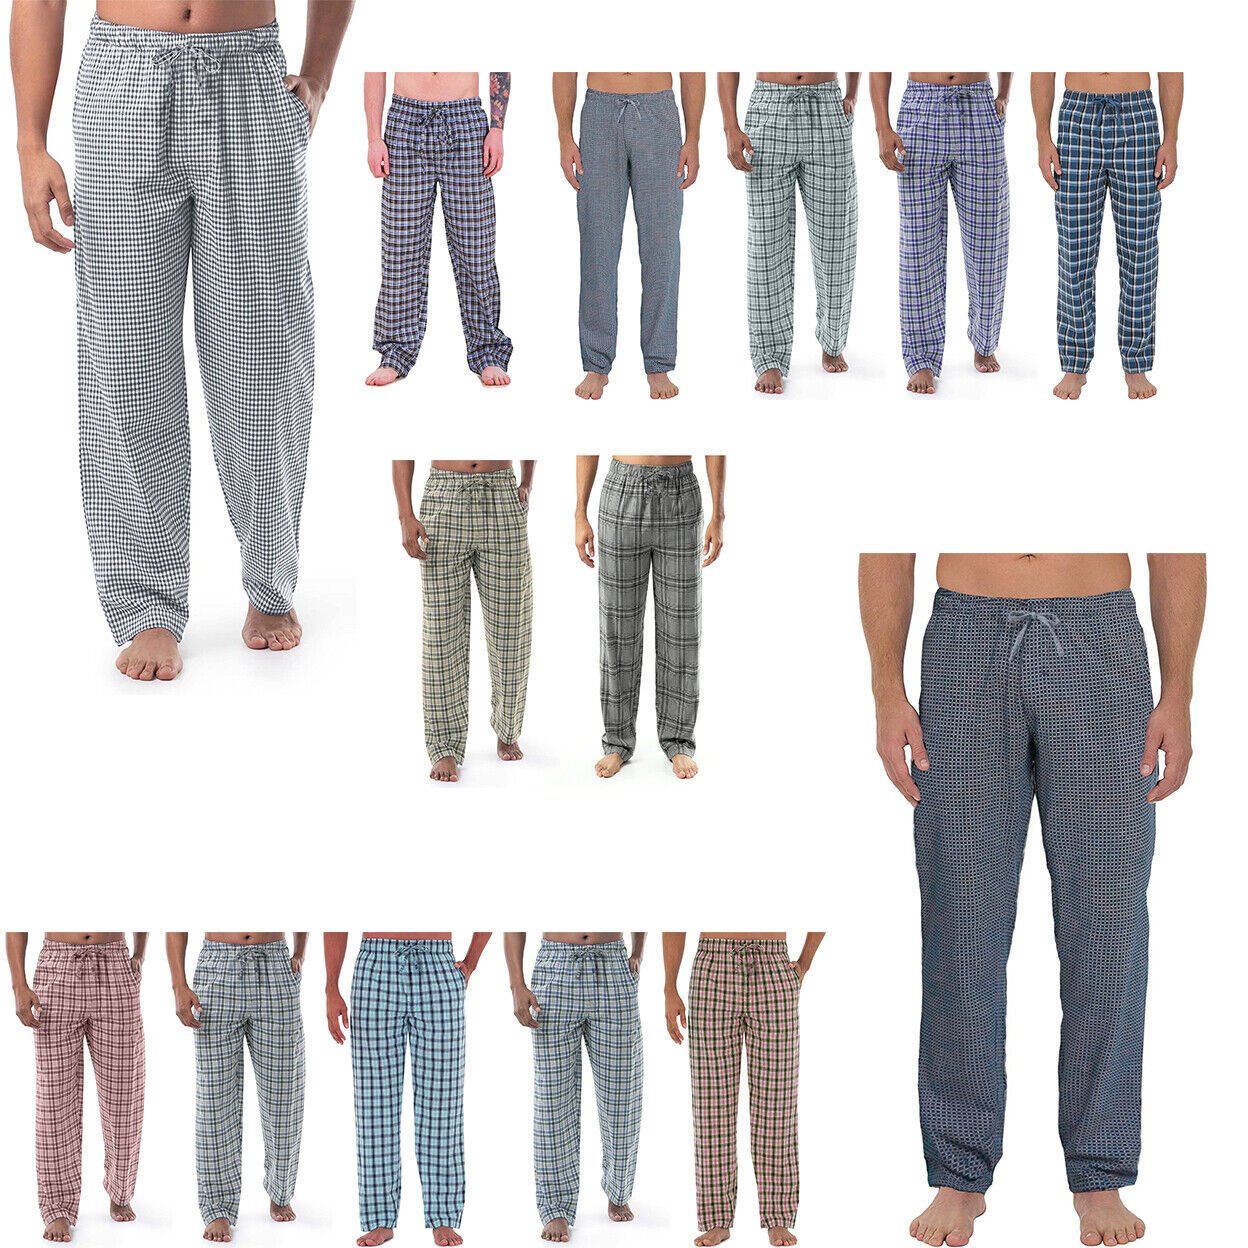 4-Pack: Men's Ultra-Soft Plaid Cotton Jersey Knit Comfy Sleep Lounge Pajama Pants - Medium